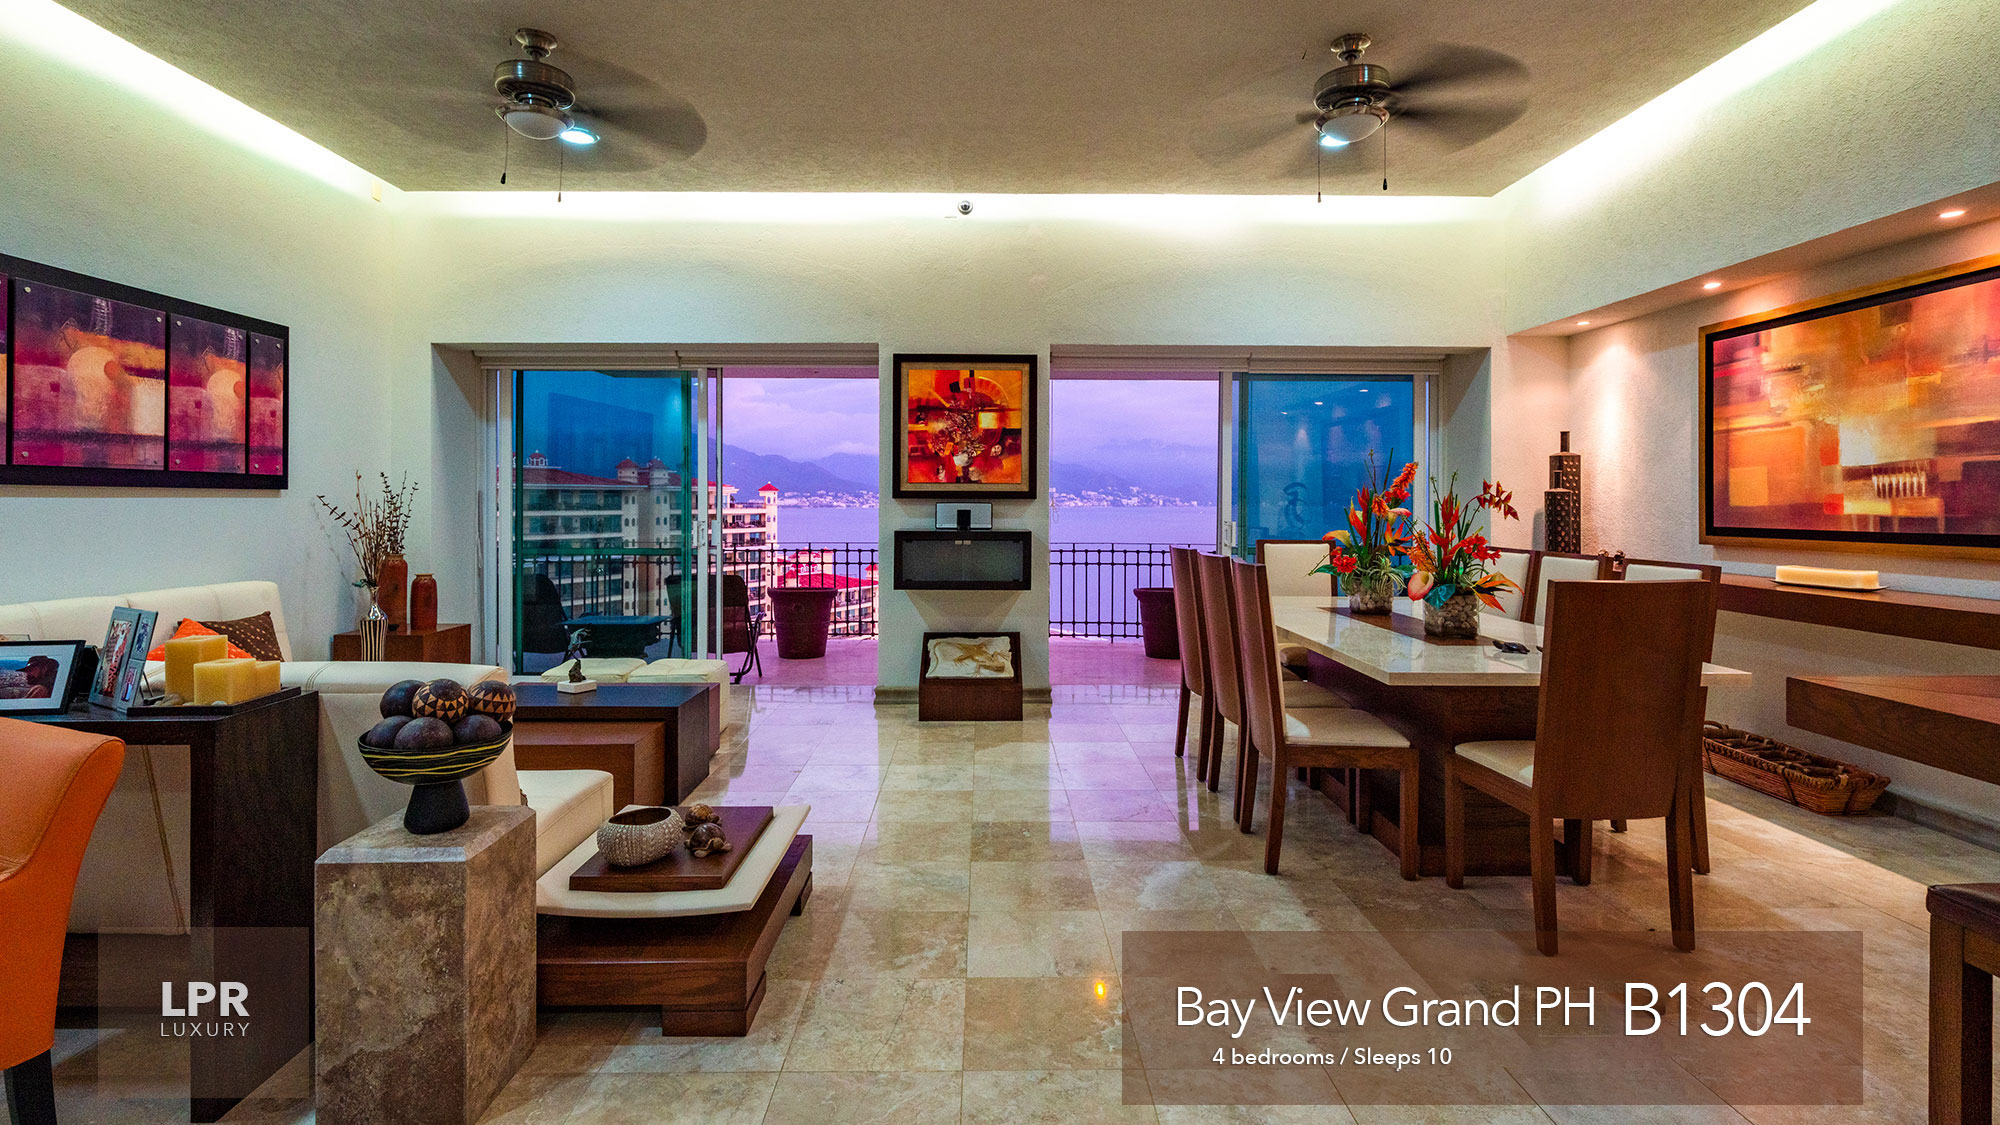 Bay View Grand PH B1304 - Puerto Vallarta Penthouse condominium for sale - Luxury Real estate